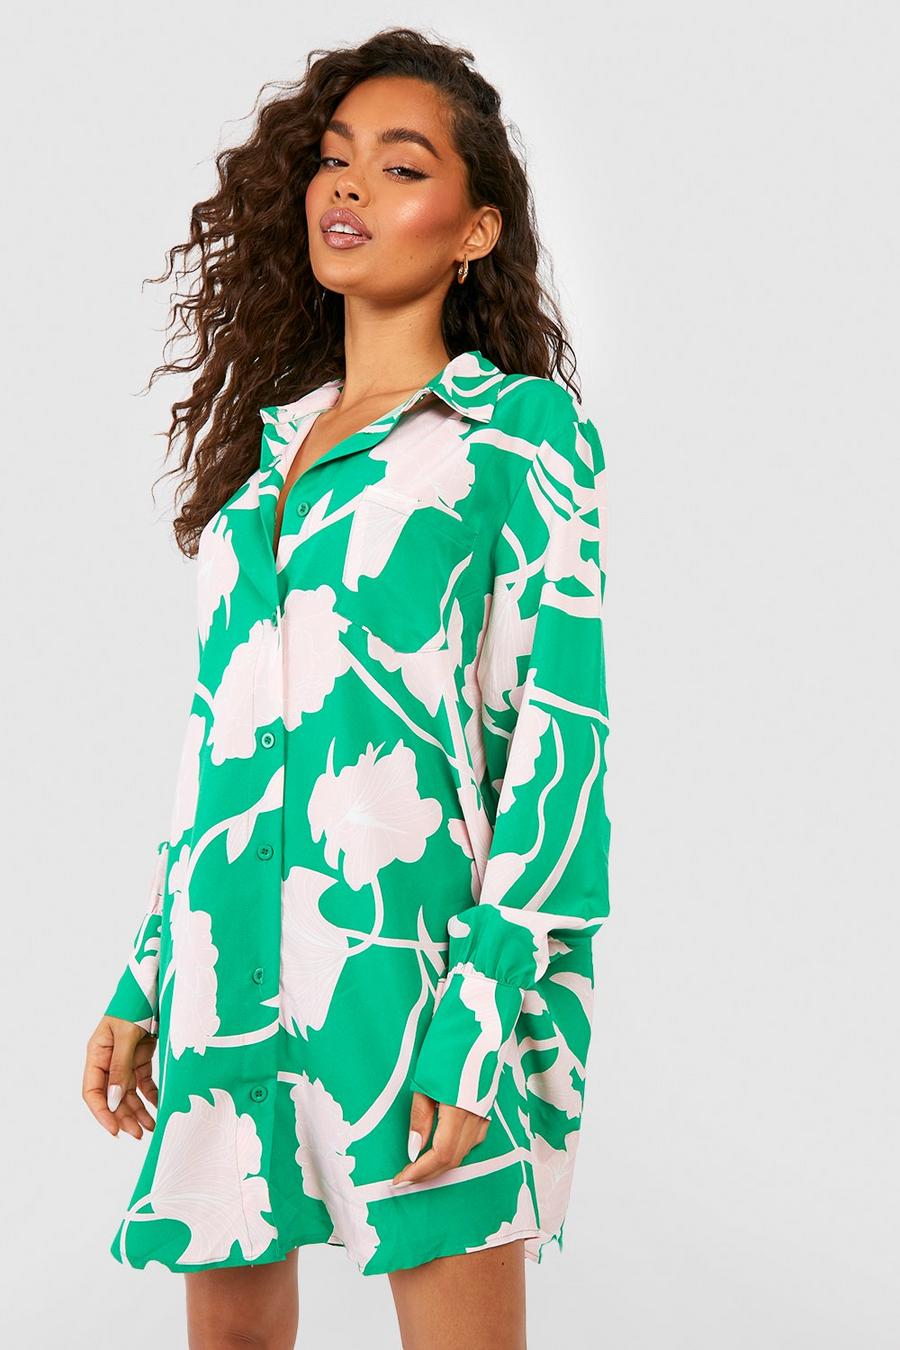 Bright green Abstract Floral Shirt Dress